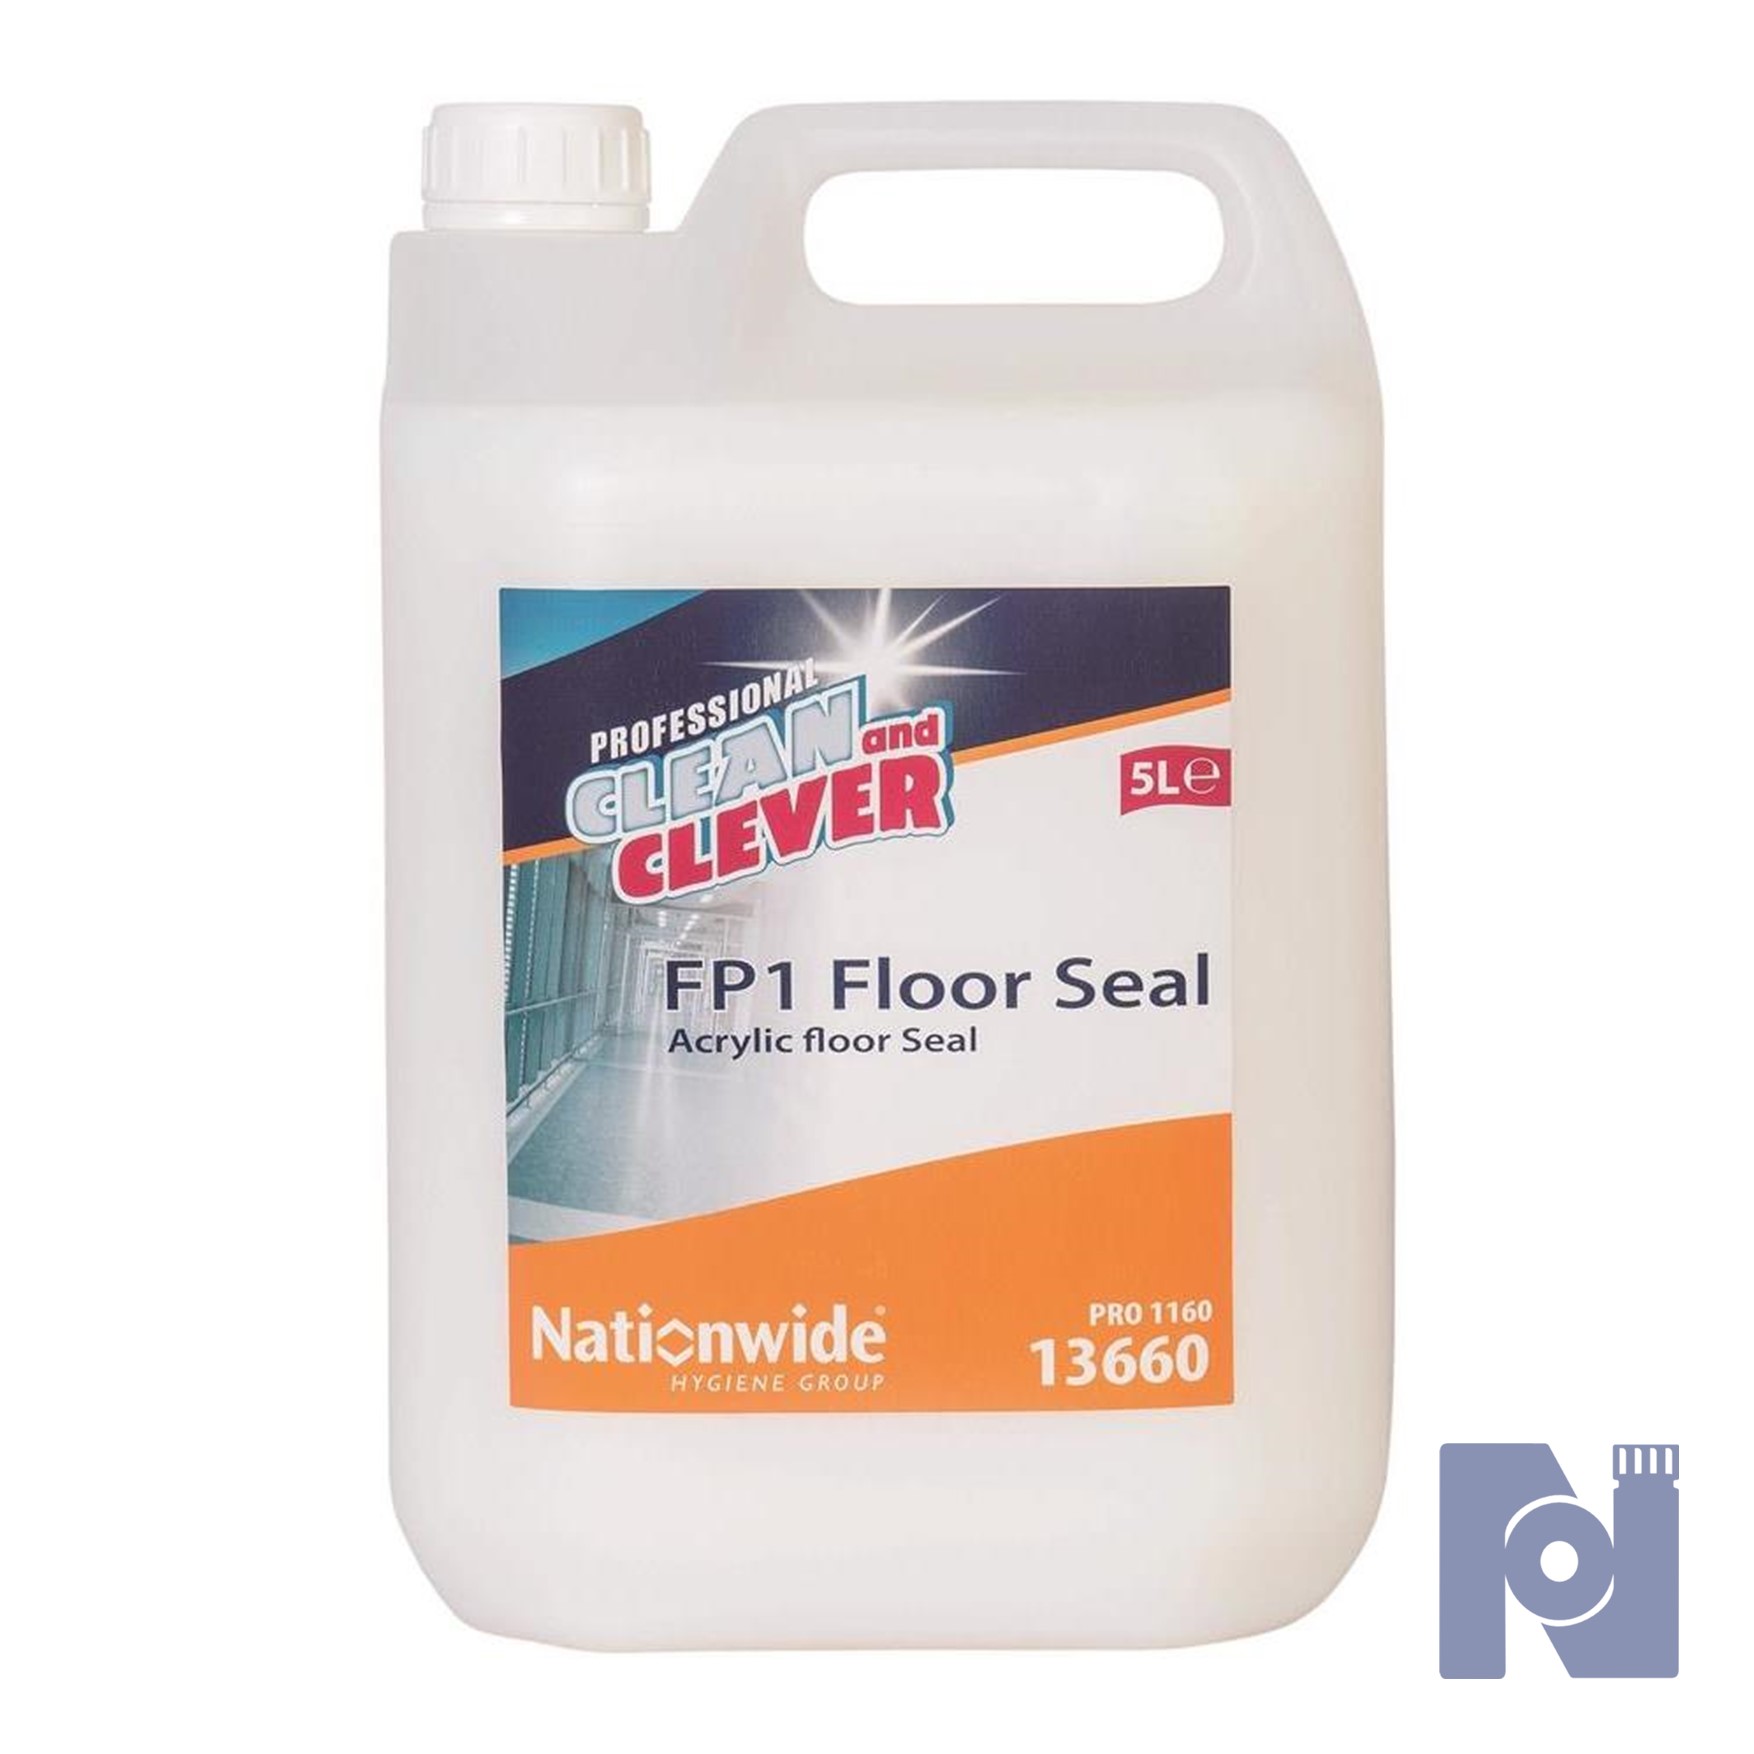 Clean & Clever FP1 Floor Seal